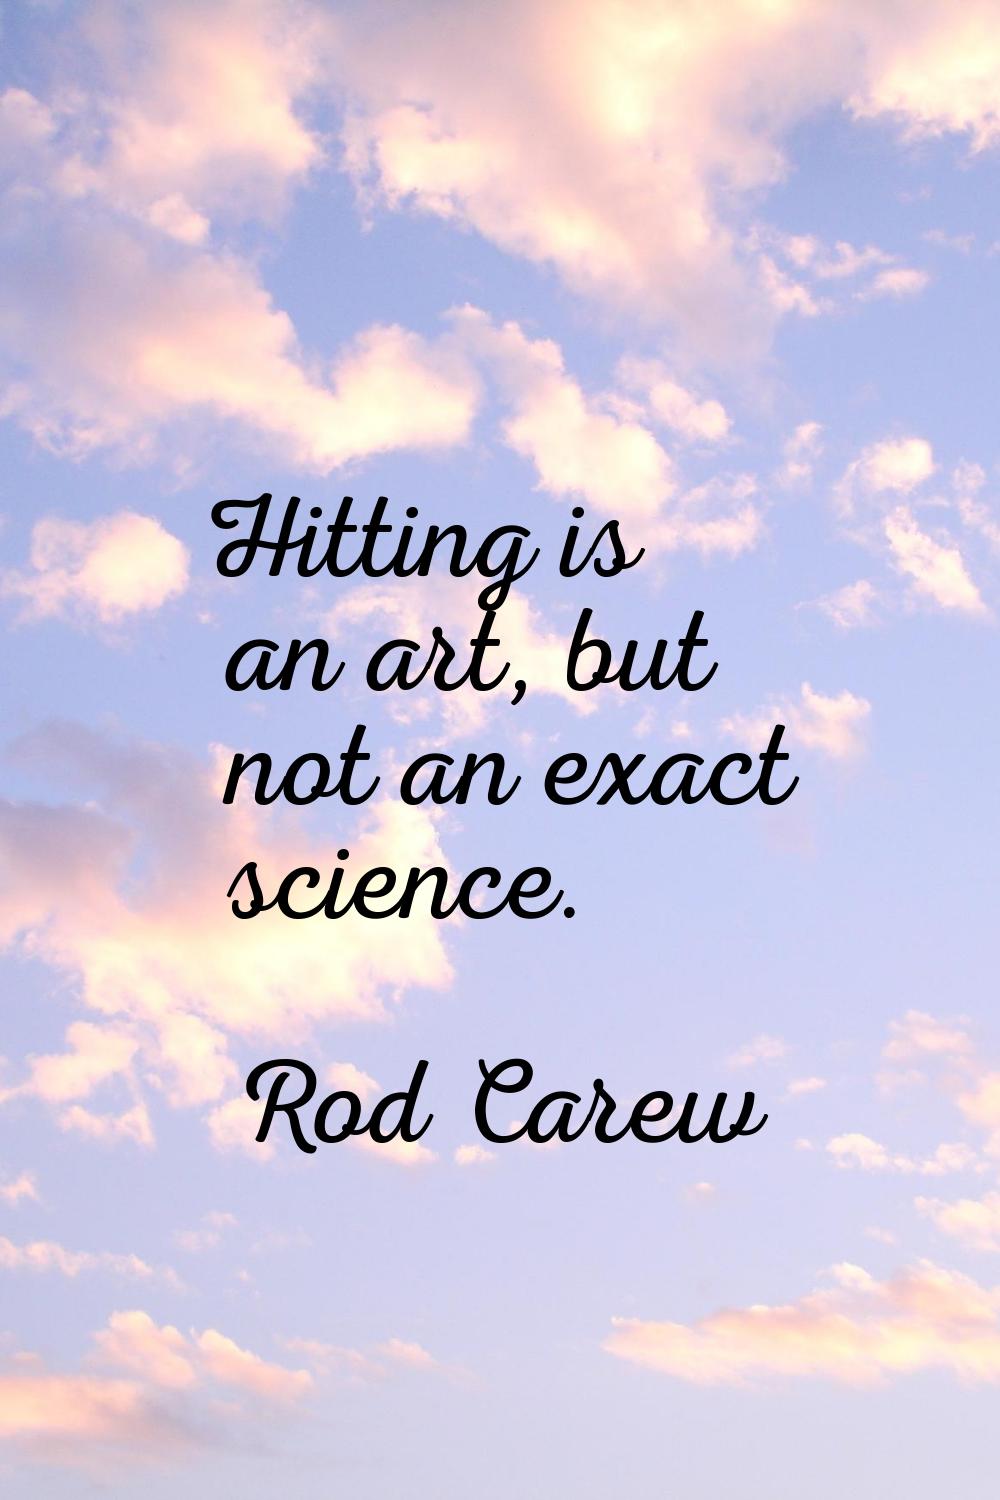 Hitting is an art, but not an exact science.